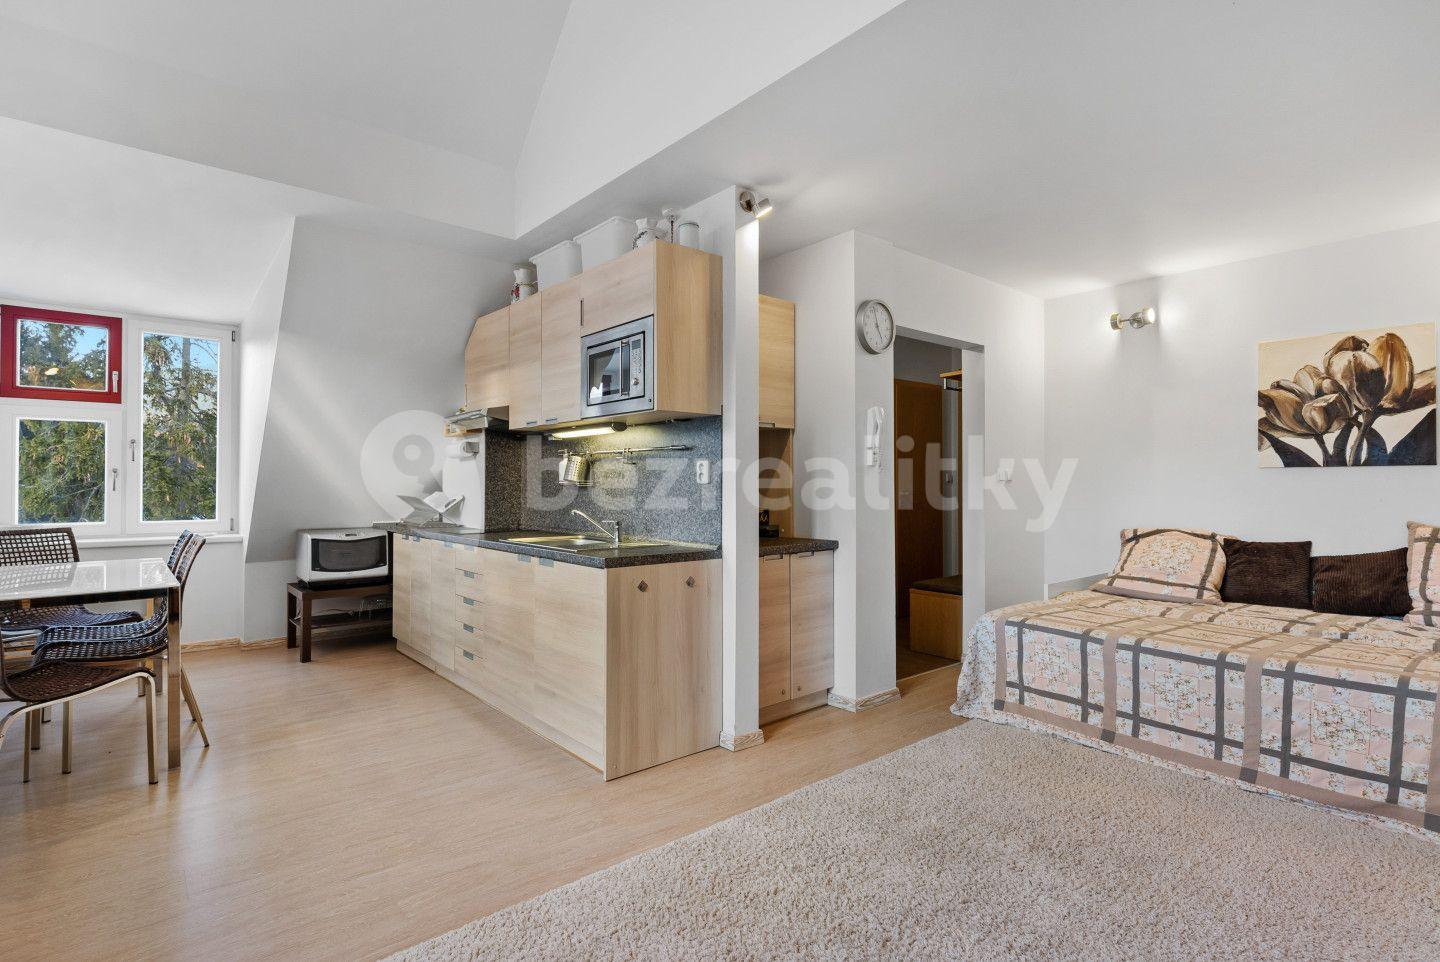 1 bedroom with open-plan kitchen flat for sale, 51 m², Harrachov, Liberecký Region